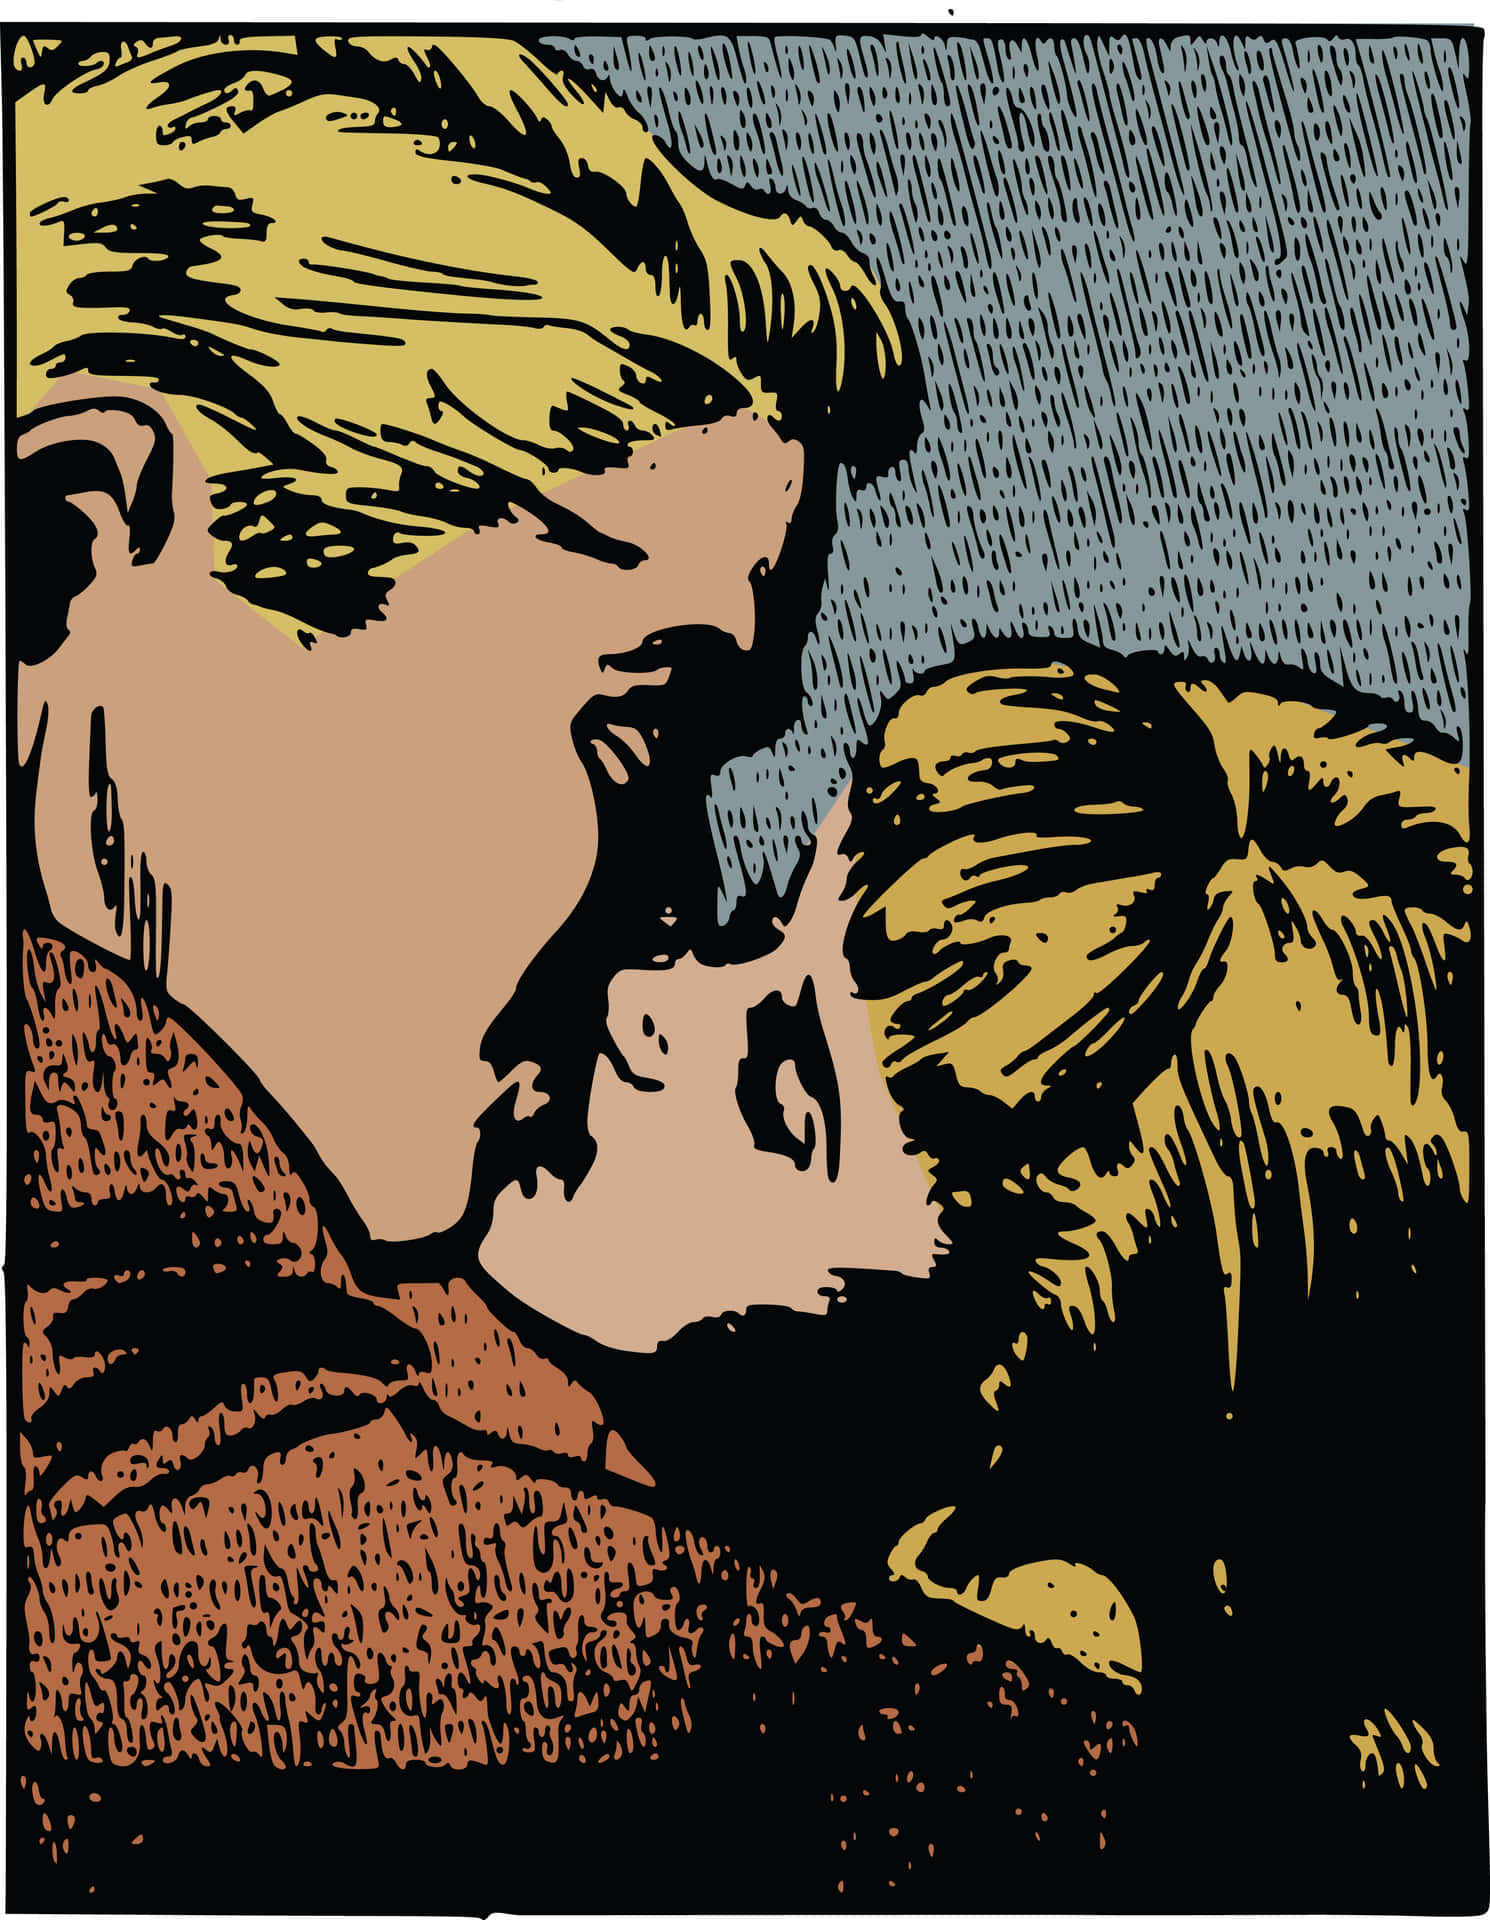 A Man Kissing A Woman In A Comic Strip